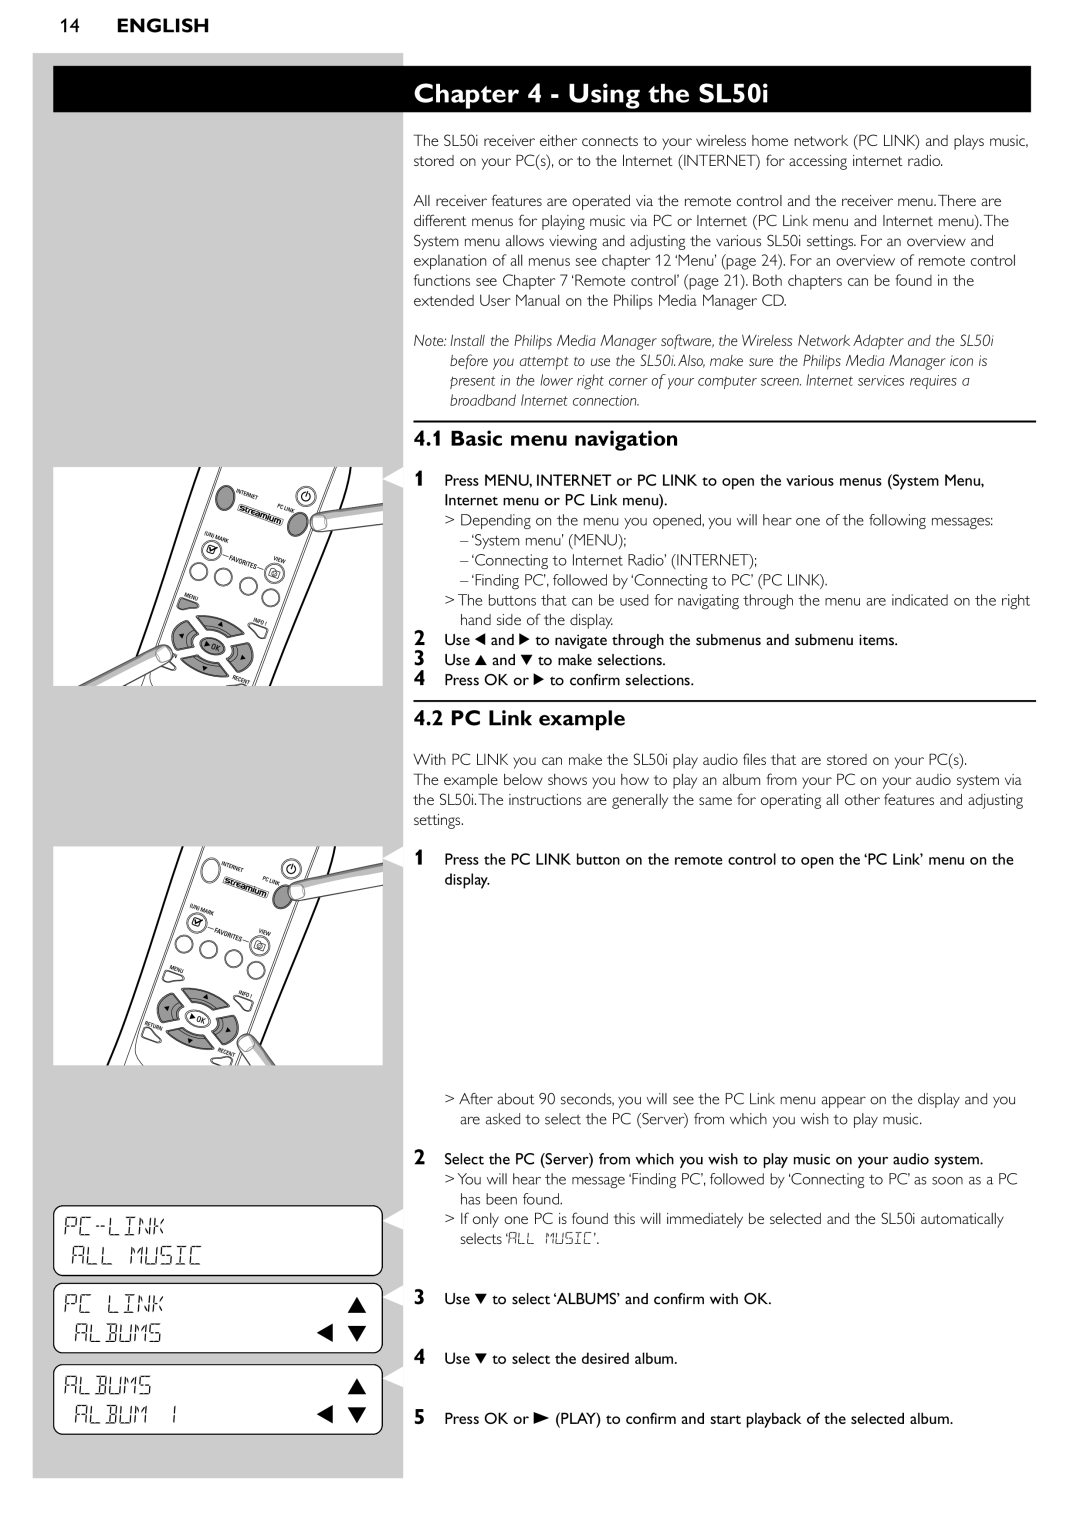 Pioneer SL50I manual Using the SL50i, Albums Album, Basic menu navigation, PC Link example, English 